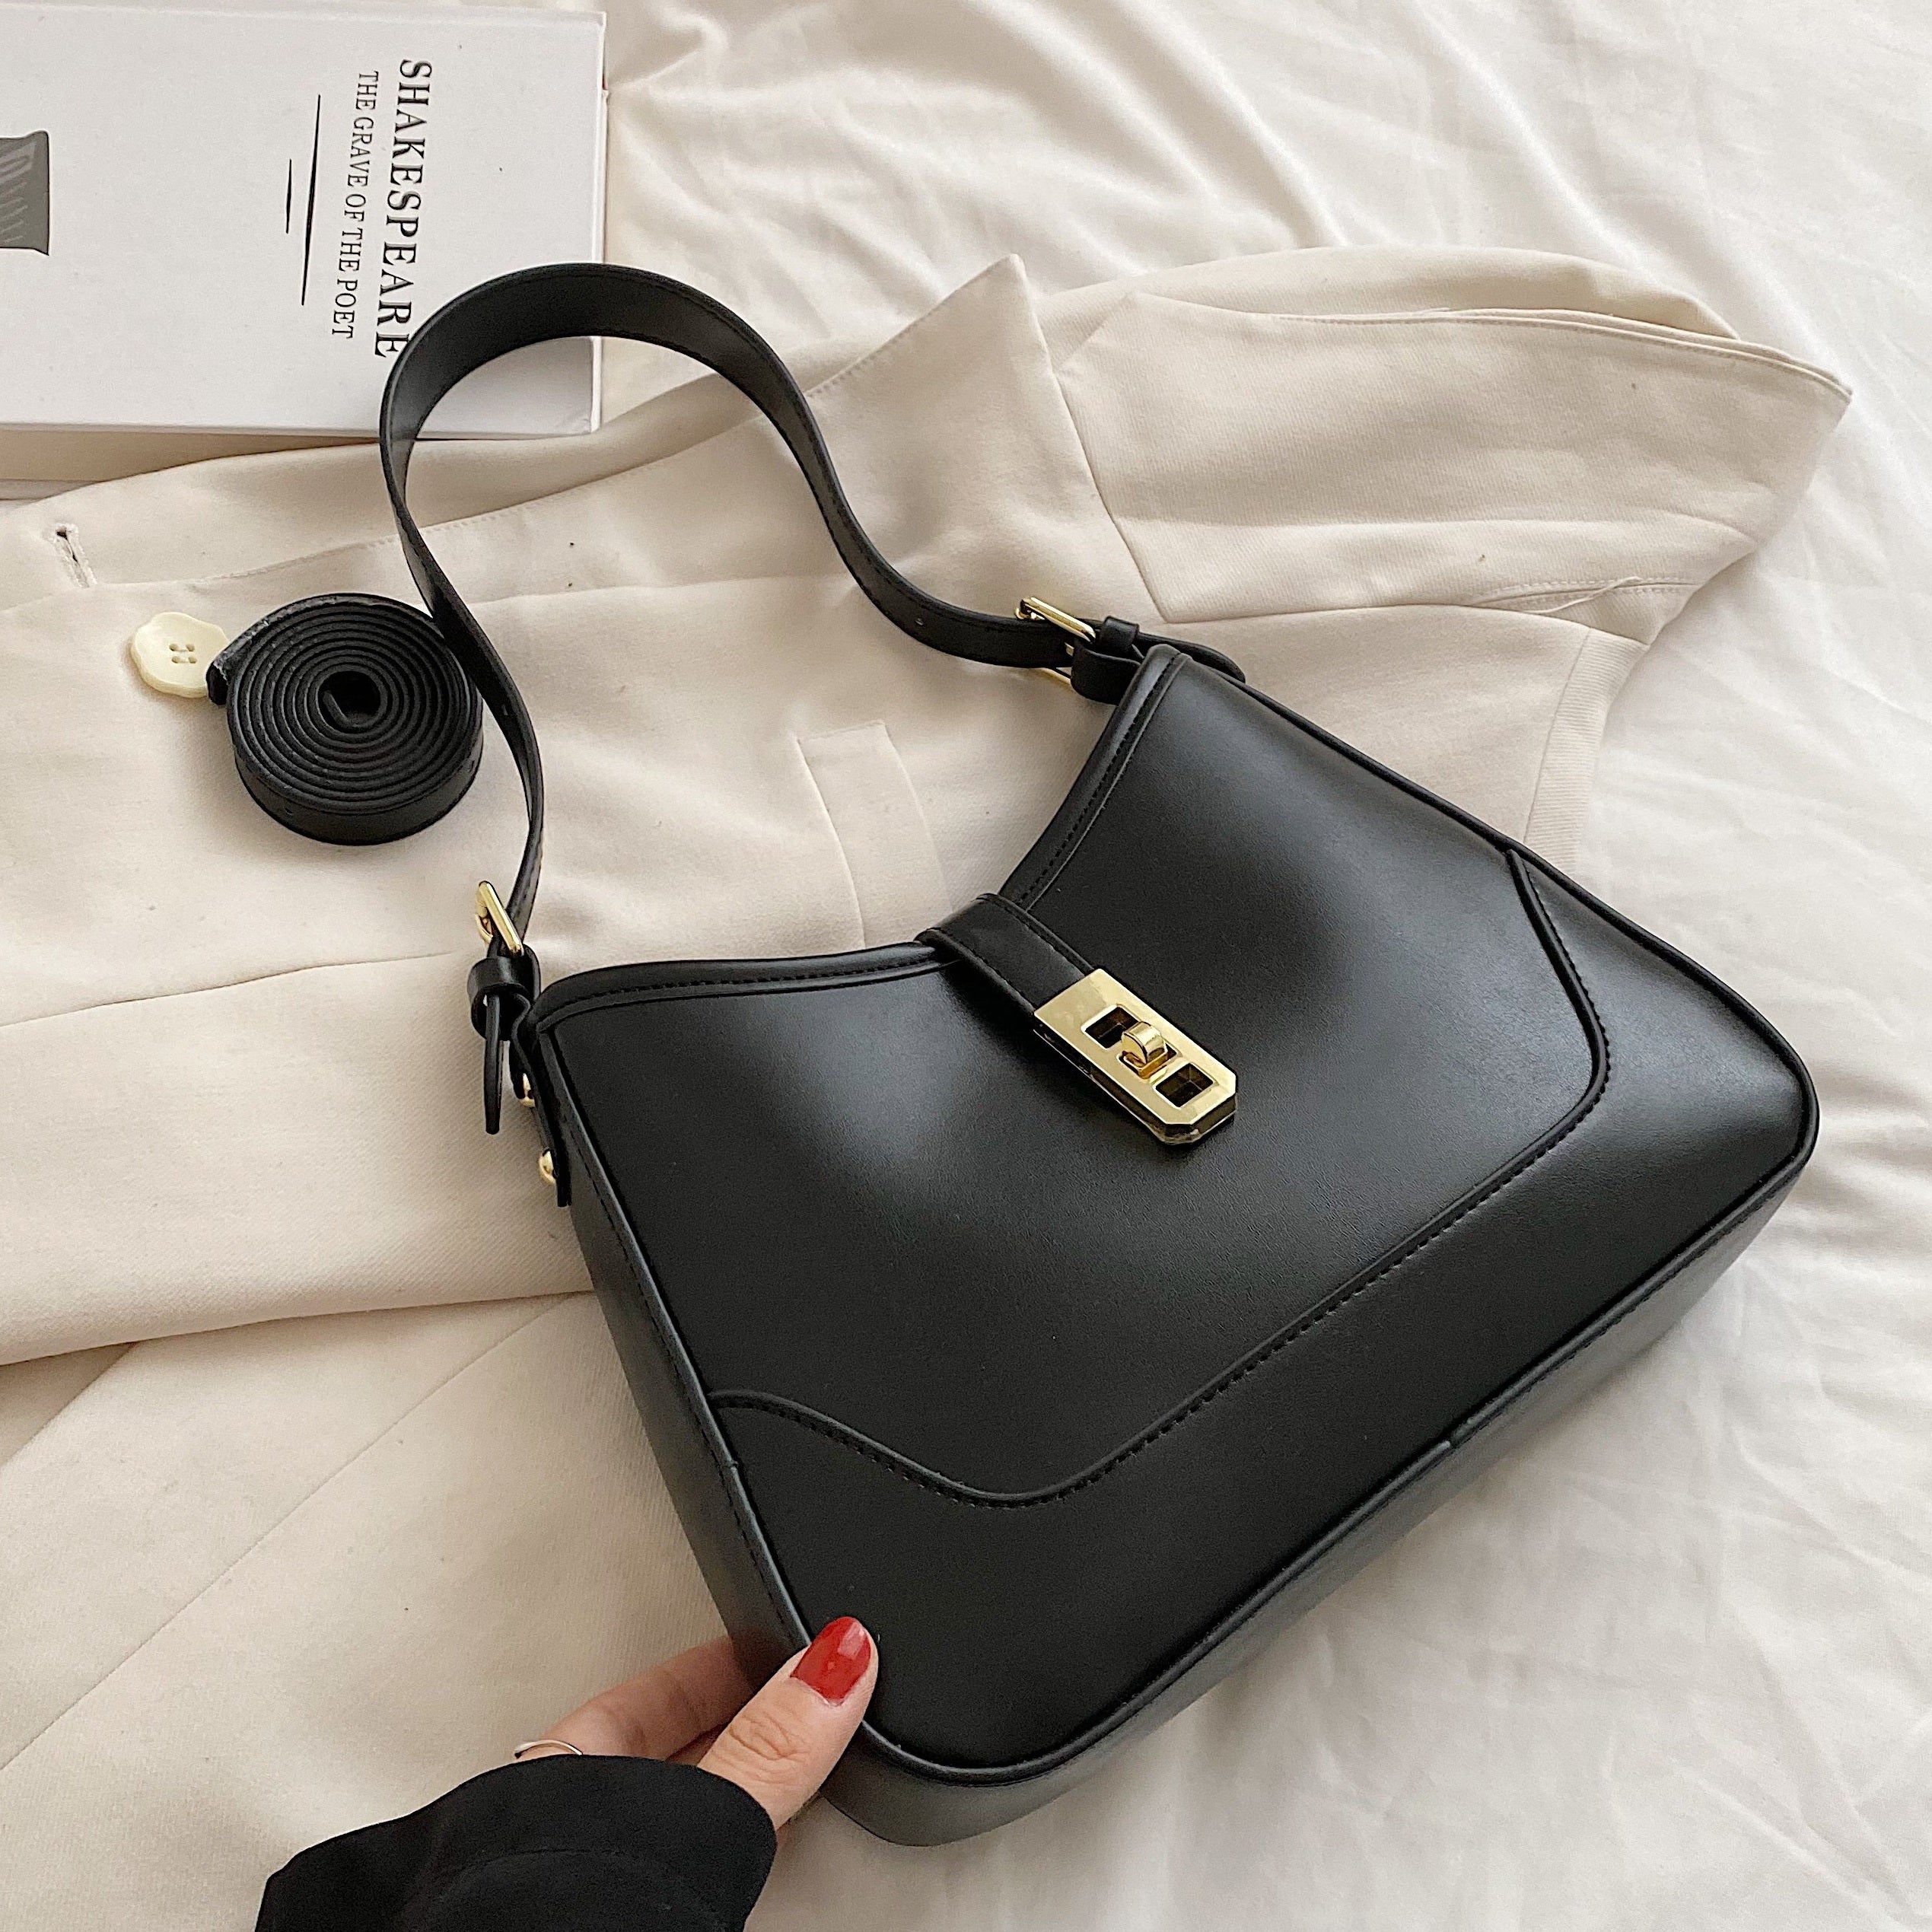 Minimalist Shoulder Bag For Women, Color Contrast Underarm Bag, Fashion PU Leather Handbag